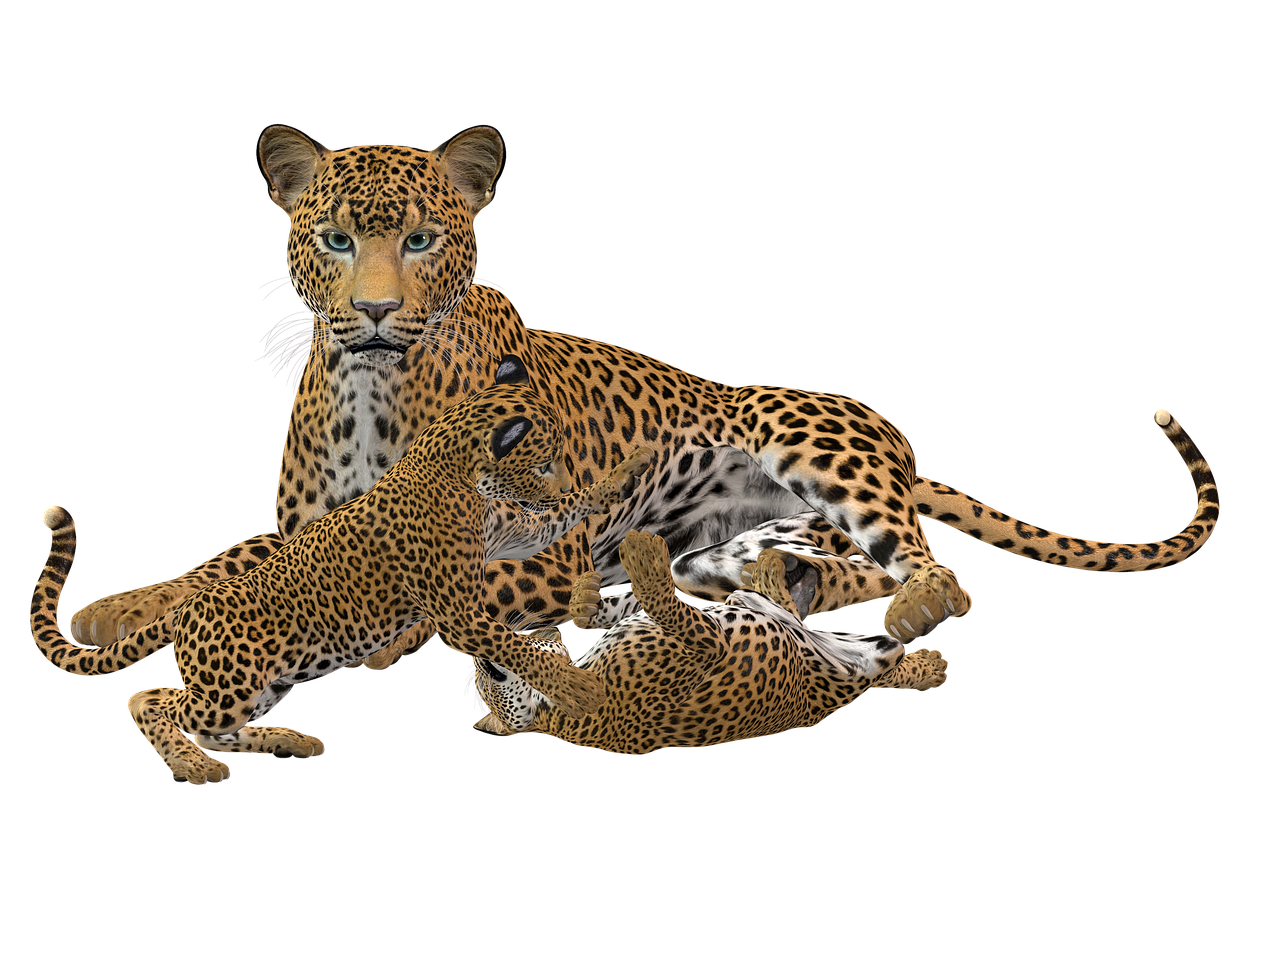 Download free photo of Cheetah,cat,predator,big cat,wild animal - from ...